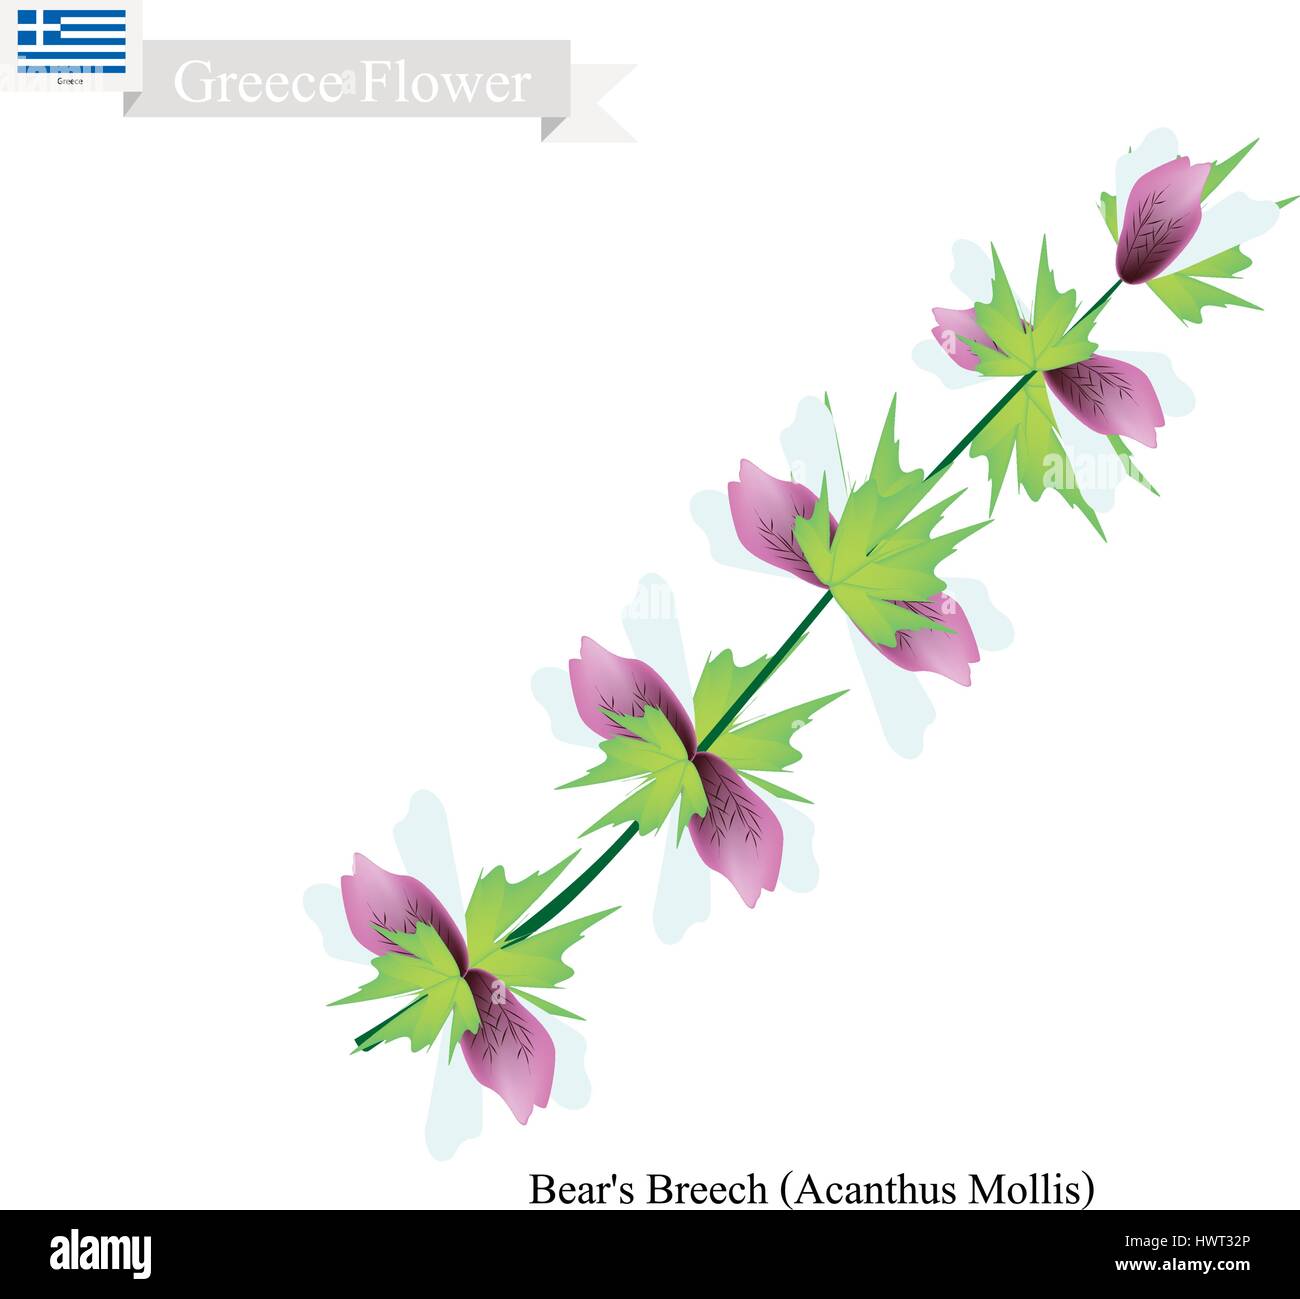 Greece Flower, Illustration of Bear's Breech or Acanthus Mollis Flowers. The National Flower of Greece. Stock Vector